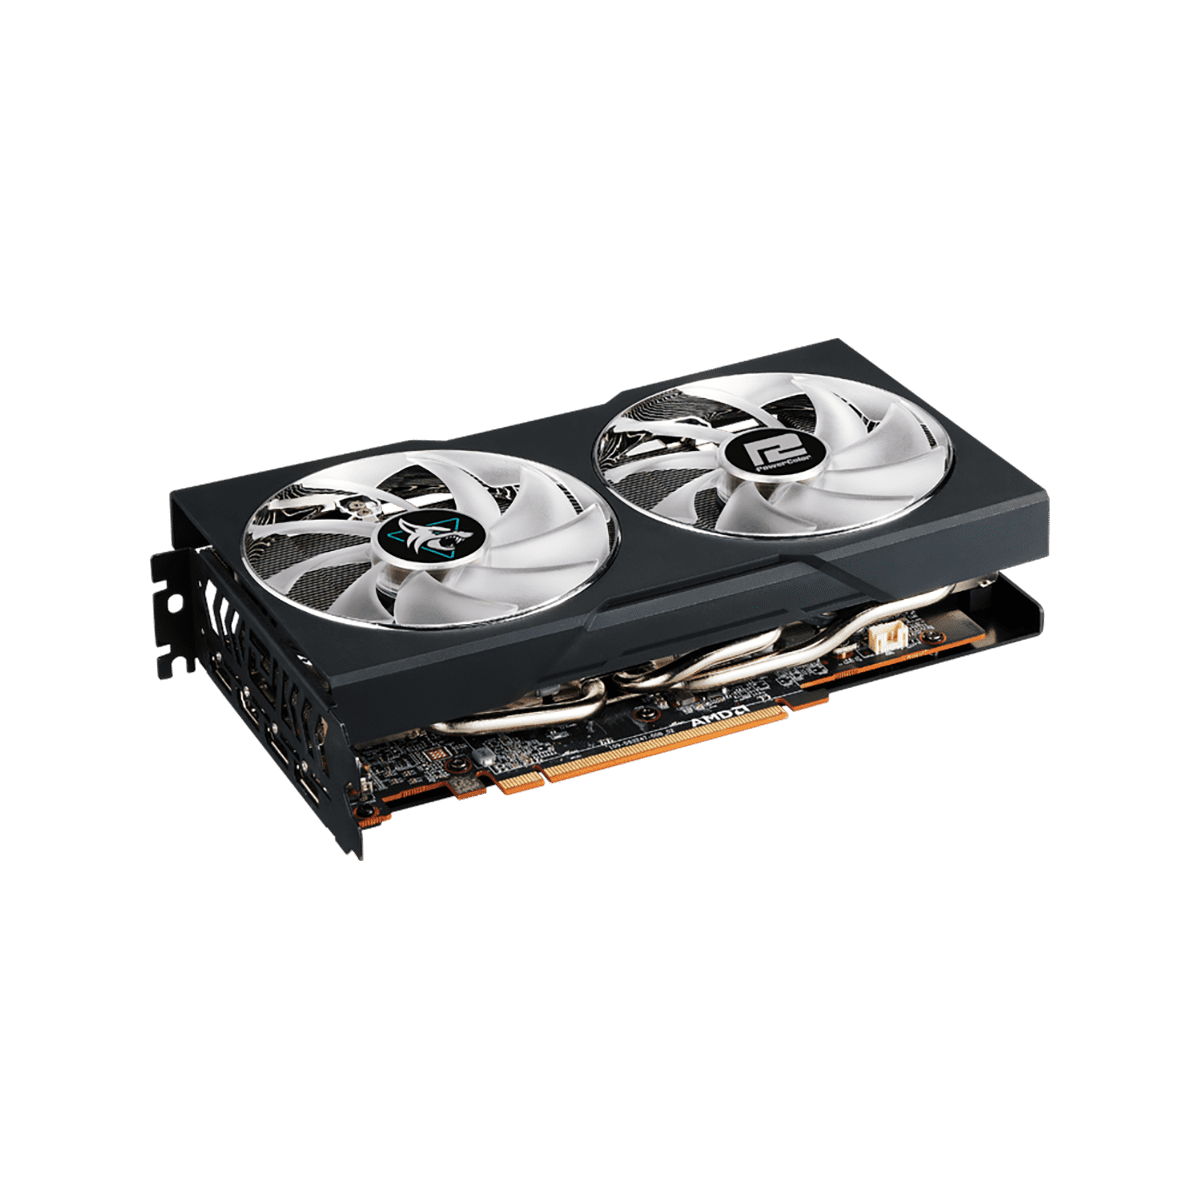 AXRX 6600 8GBD6-3DHL | PowerColor(パワーカラー) Radeon RX 6600